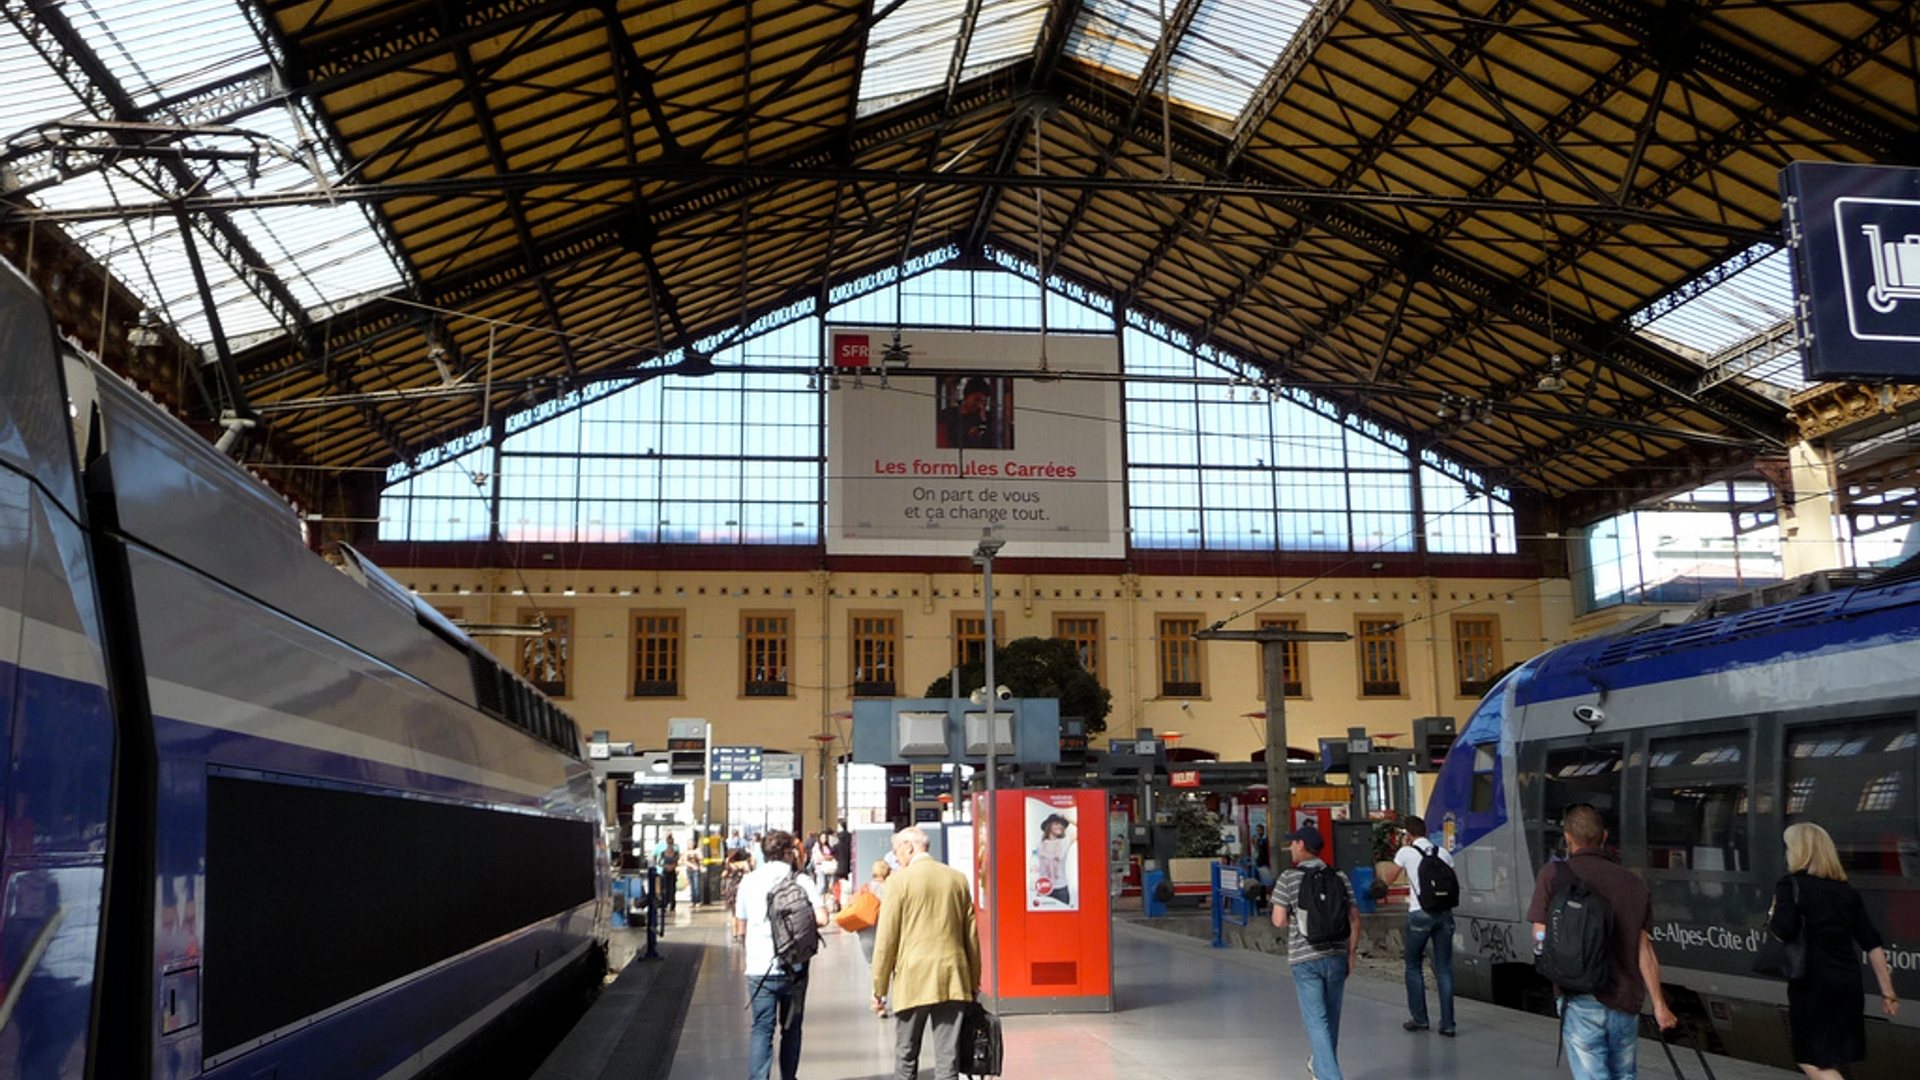 La gare saint charles - Marseille